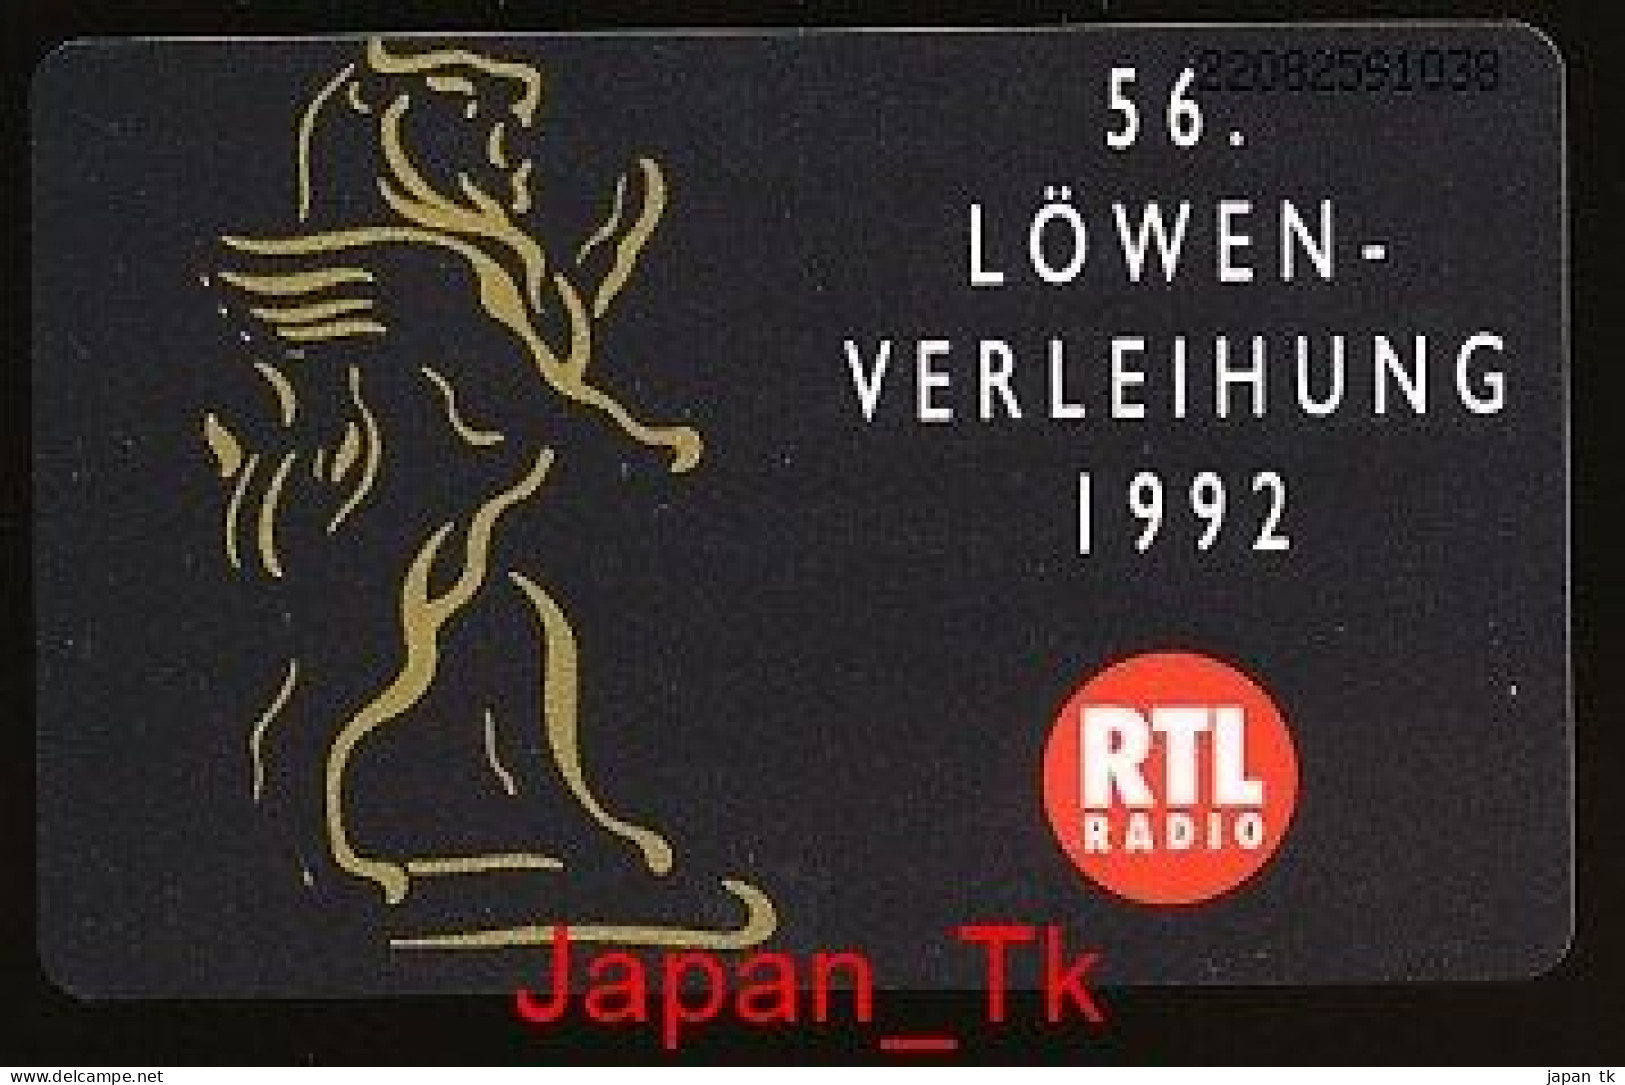 GERMANY K 192  92  RTL Radio - Aufl  3 000 - Siehe Scan - K-Series: Kundenserie